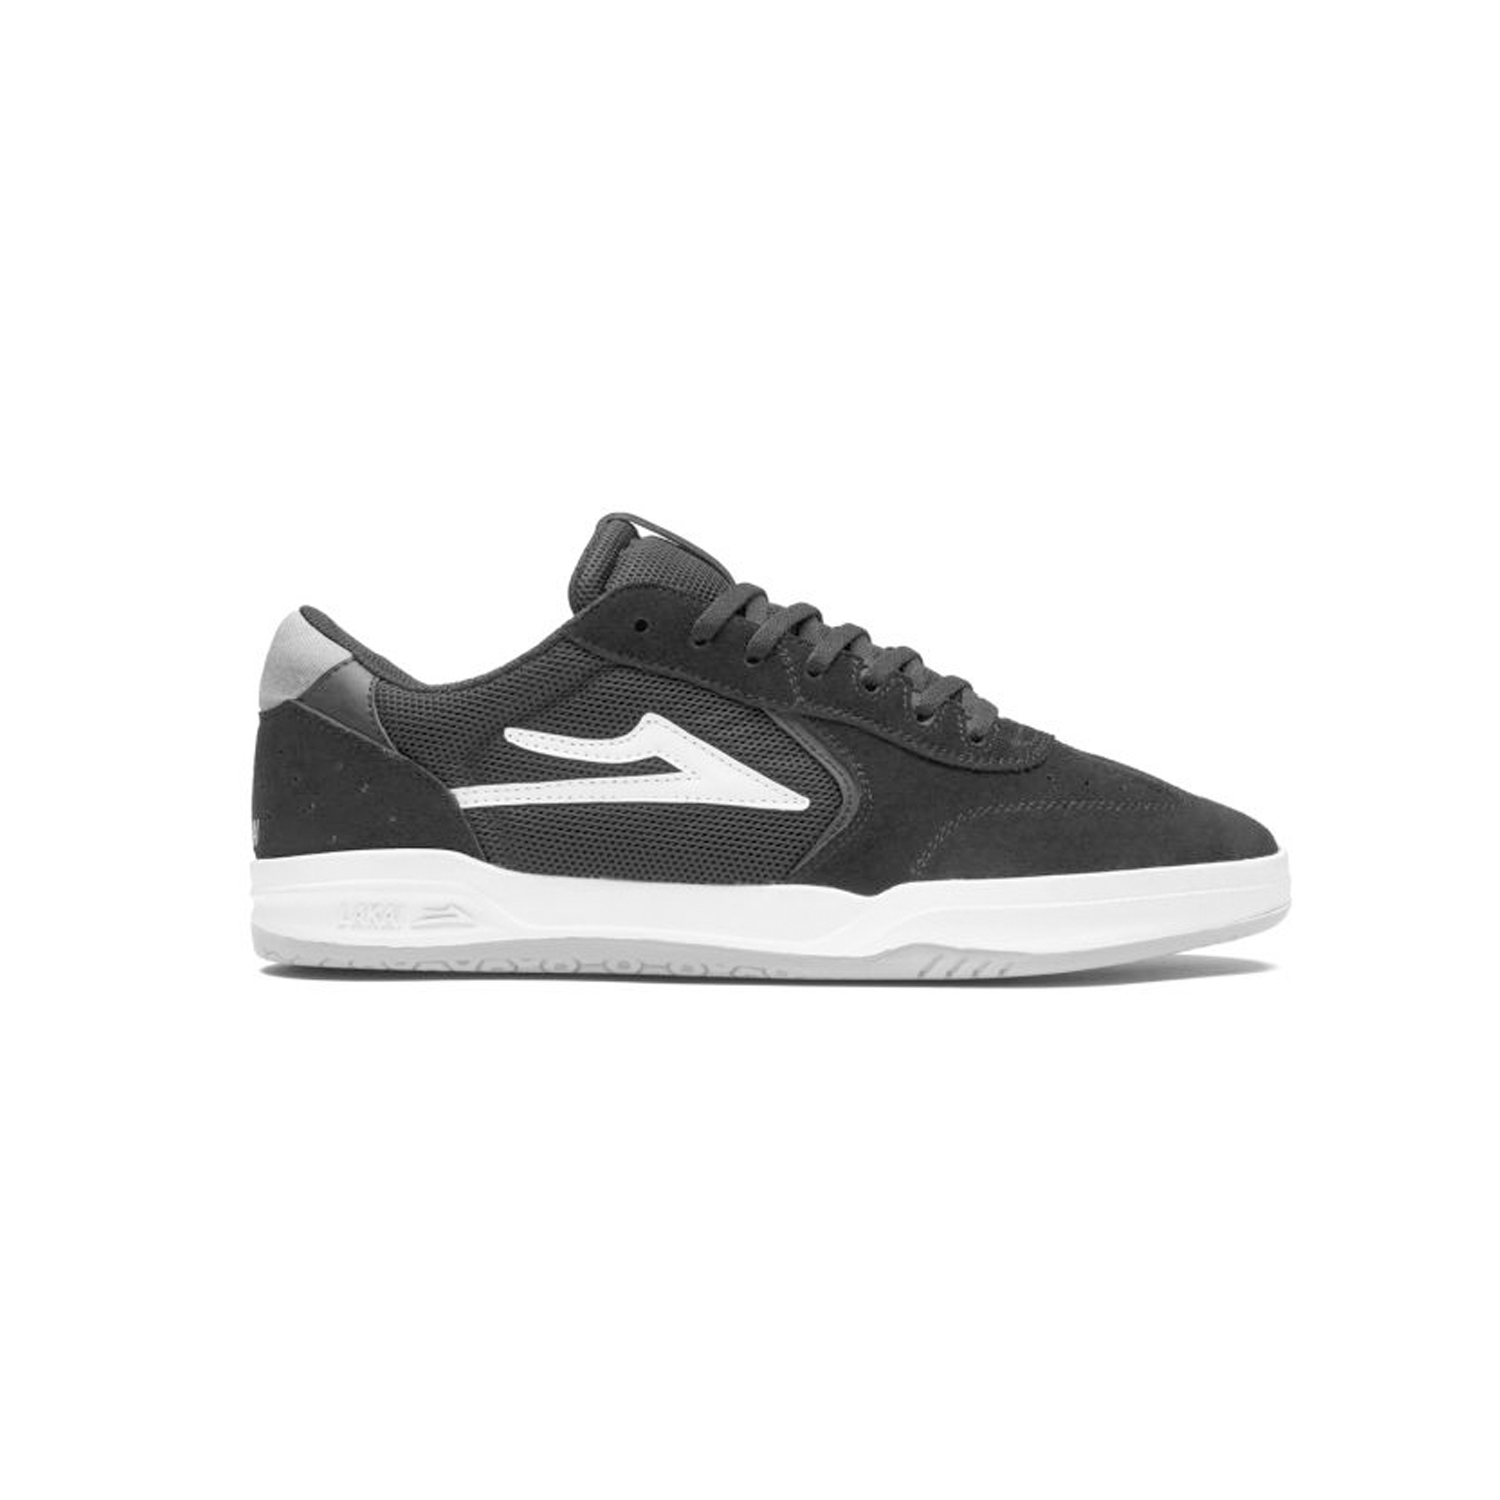 Lakai - Atlantic Skateboard Shoes - Black/Light Grey Suede SALE